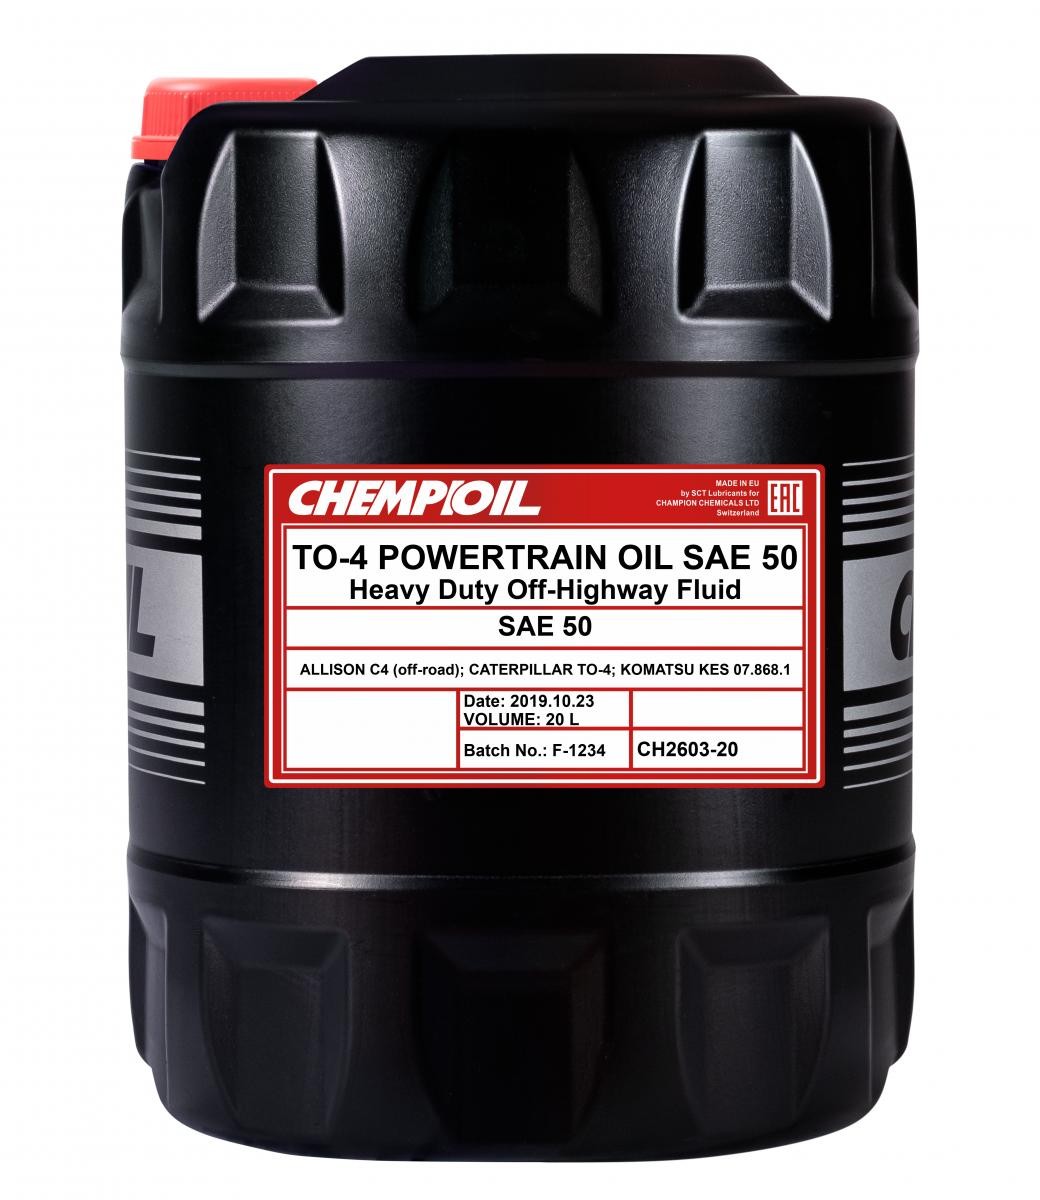 CHEMPIOIL POWERTRAIN OIL, TO-4 SAE 50, 20l Motor oil CH2603-20 buy